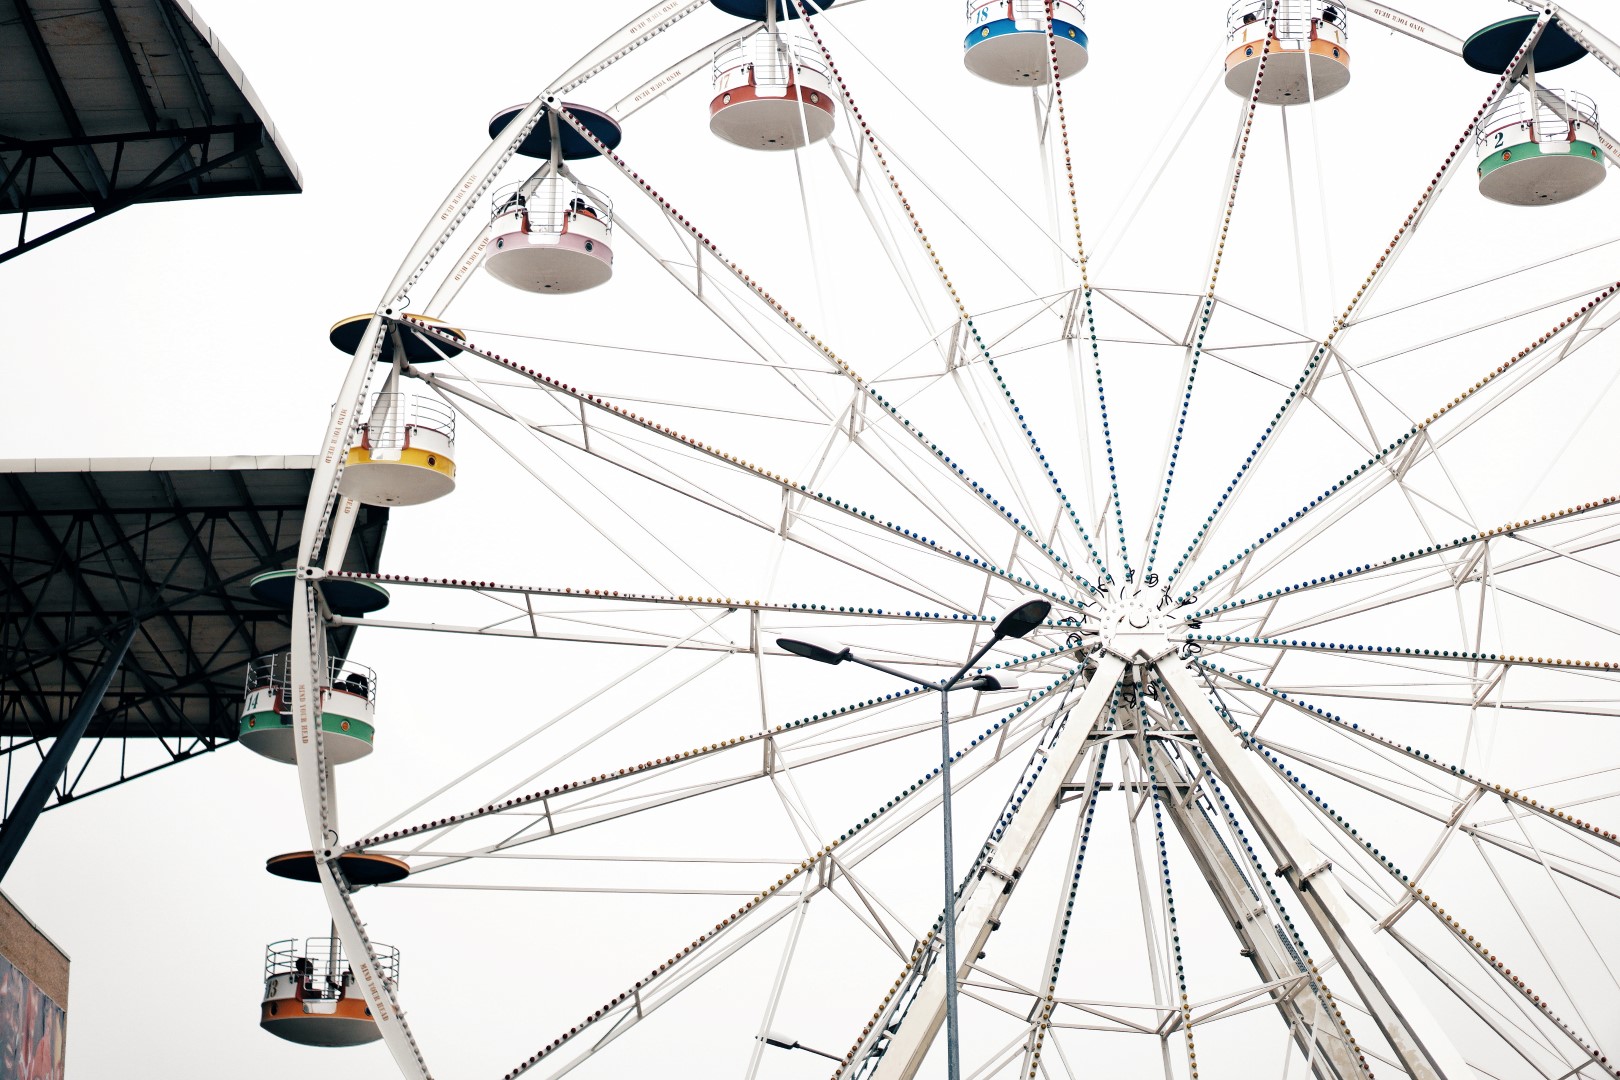 Ferris Wheel at Shoprite mall in Enugu